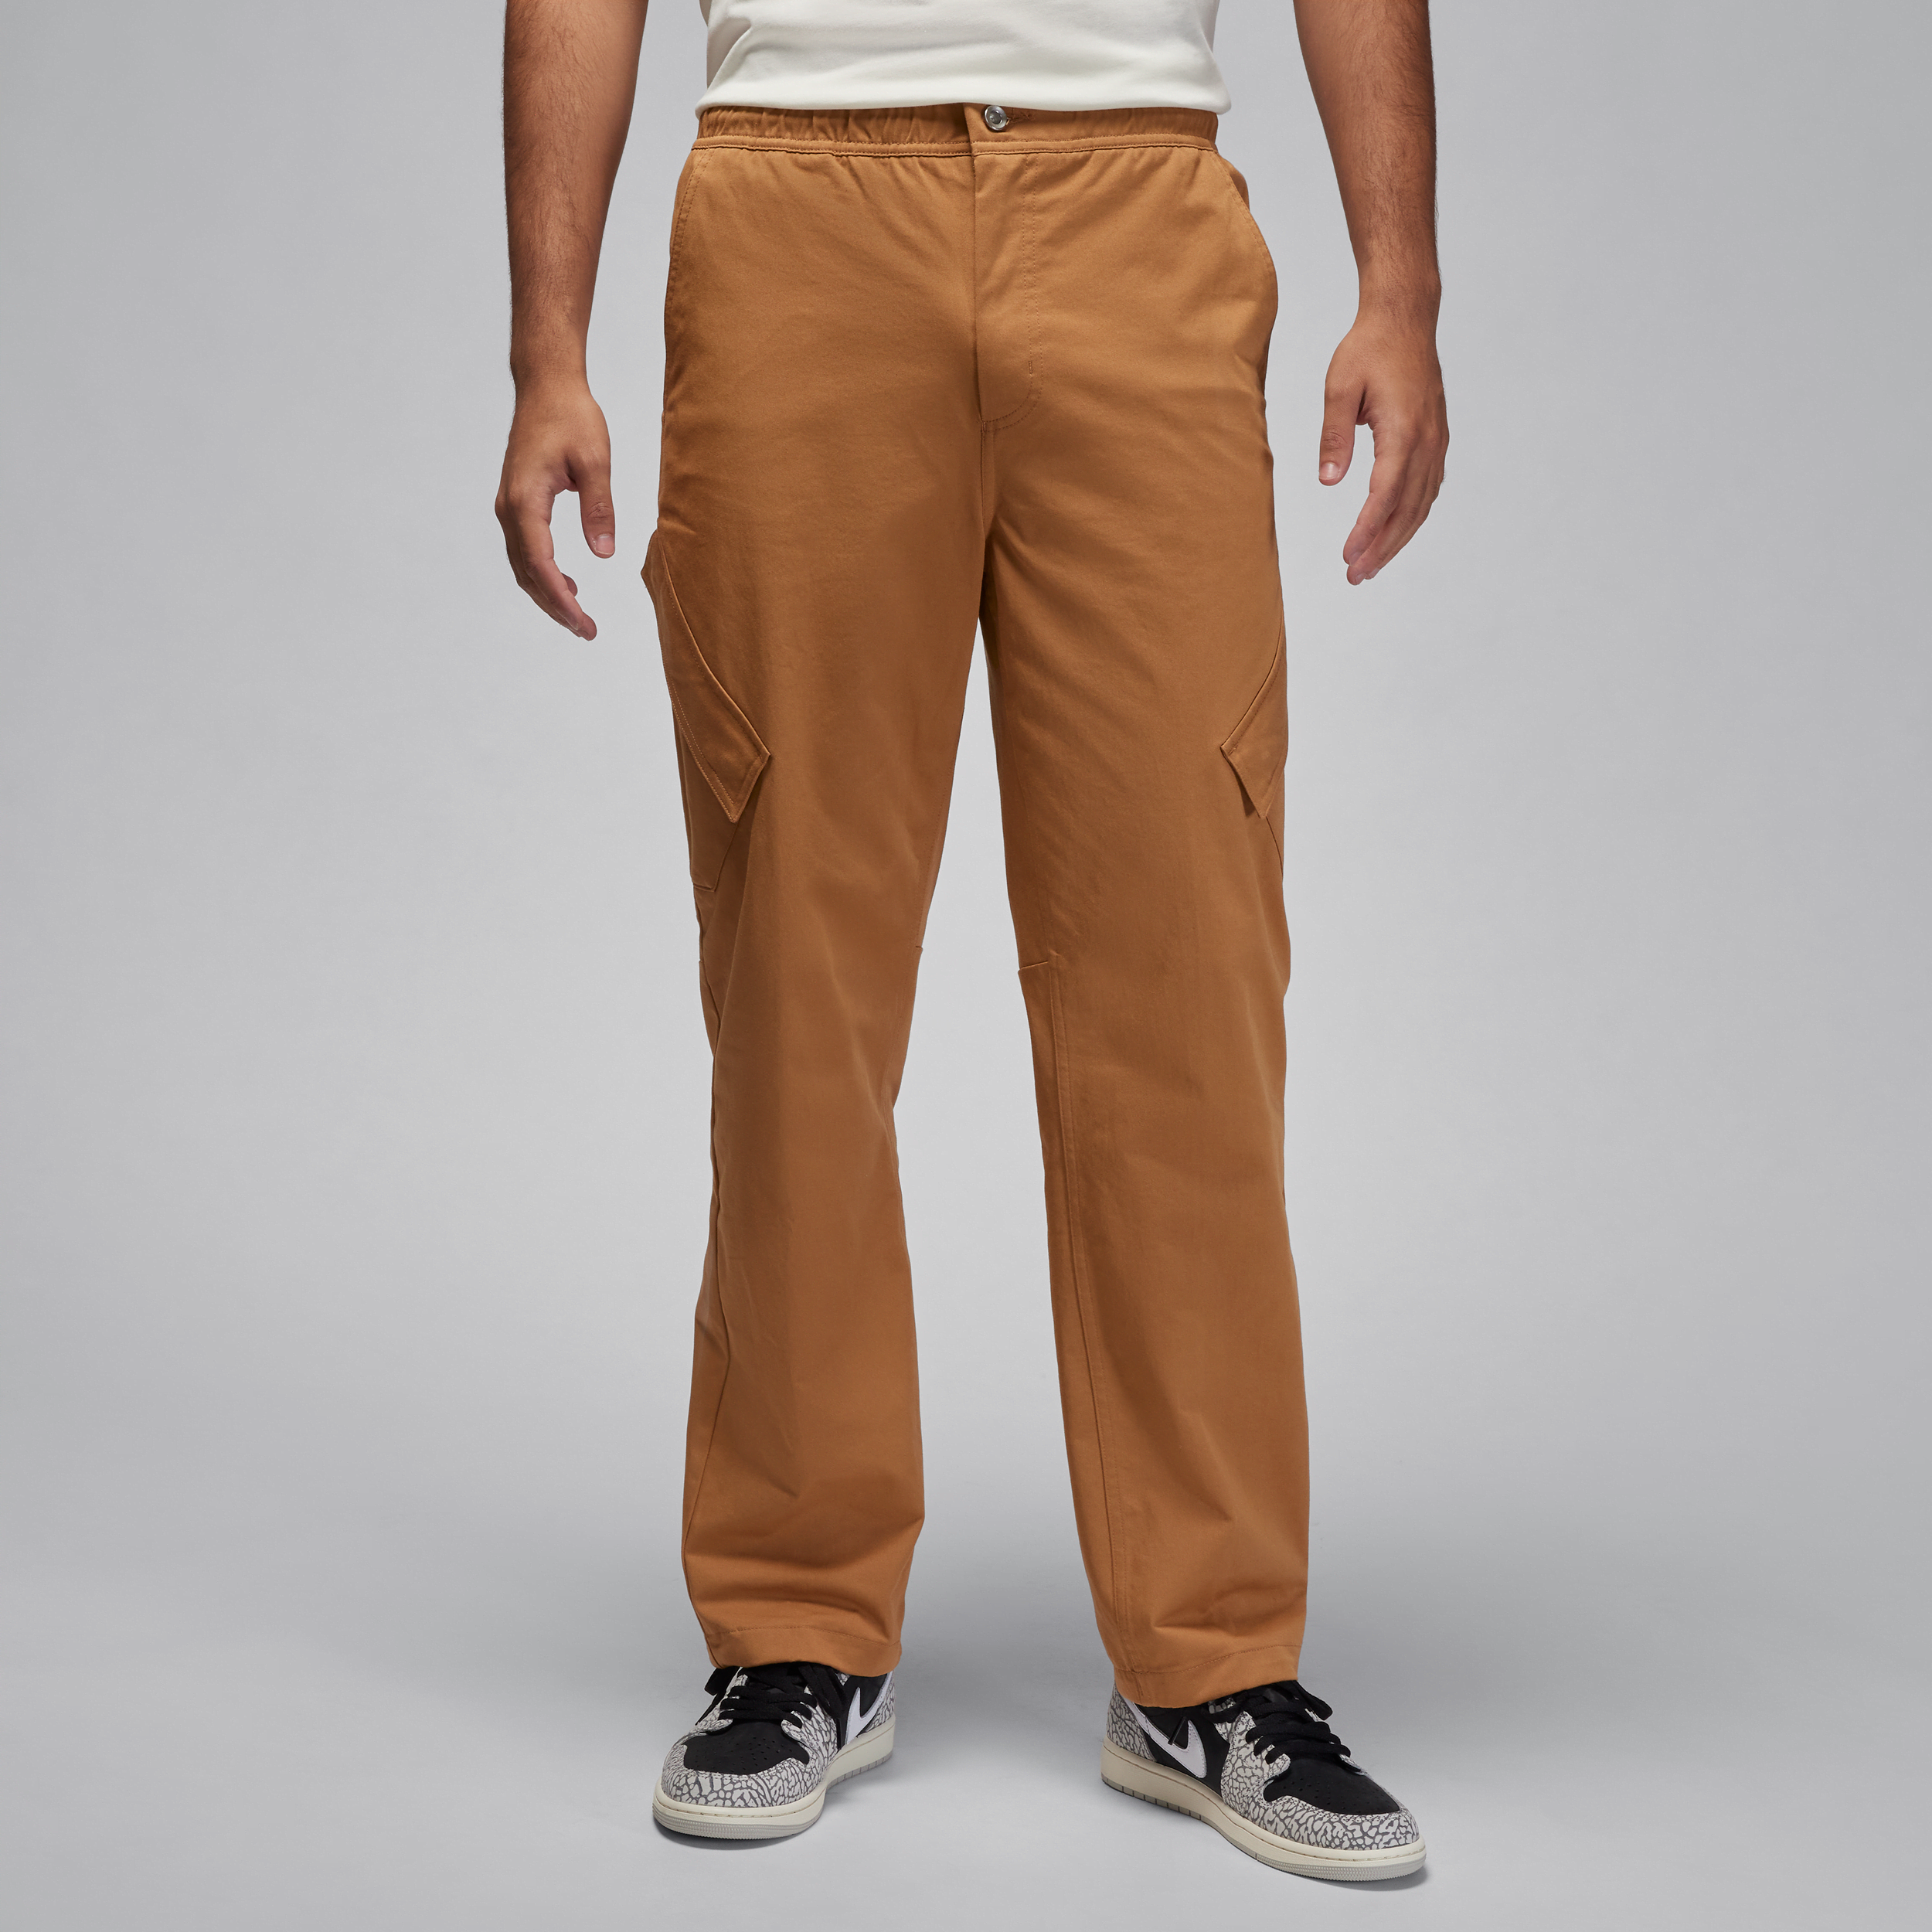 jordan pantaloni chicago  essentials – uomo - marrone